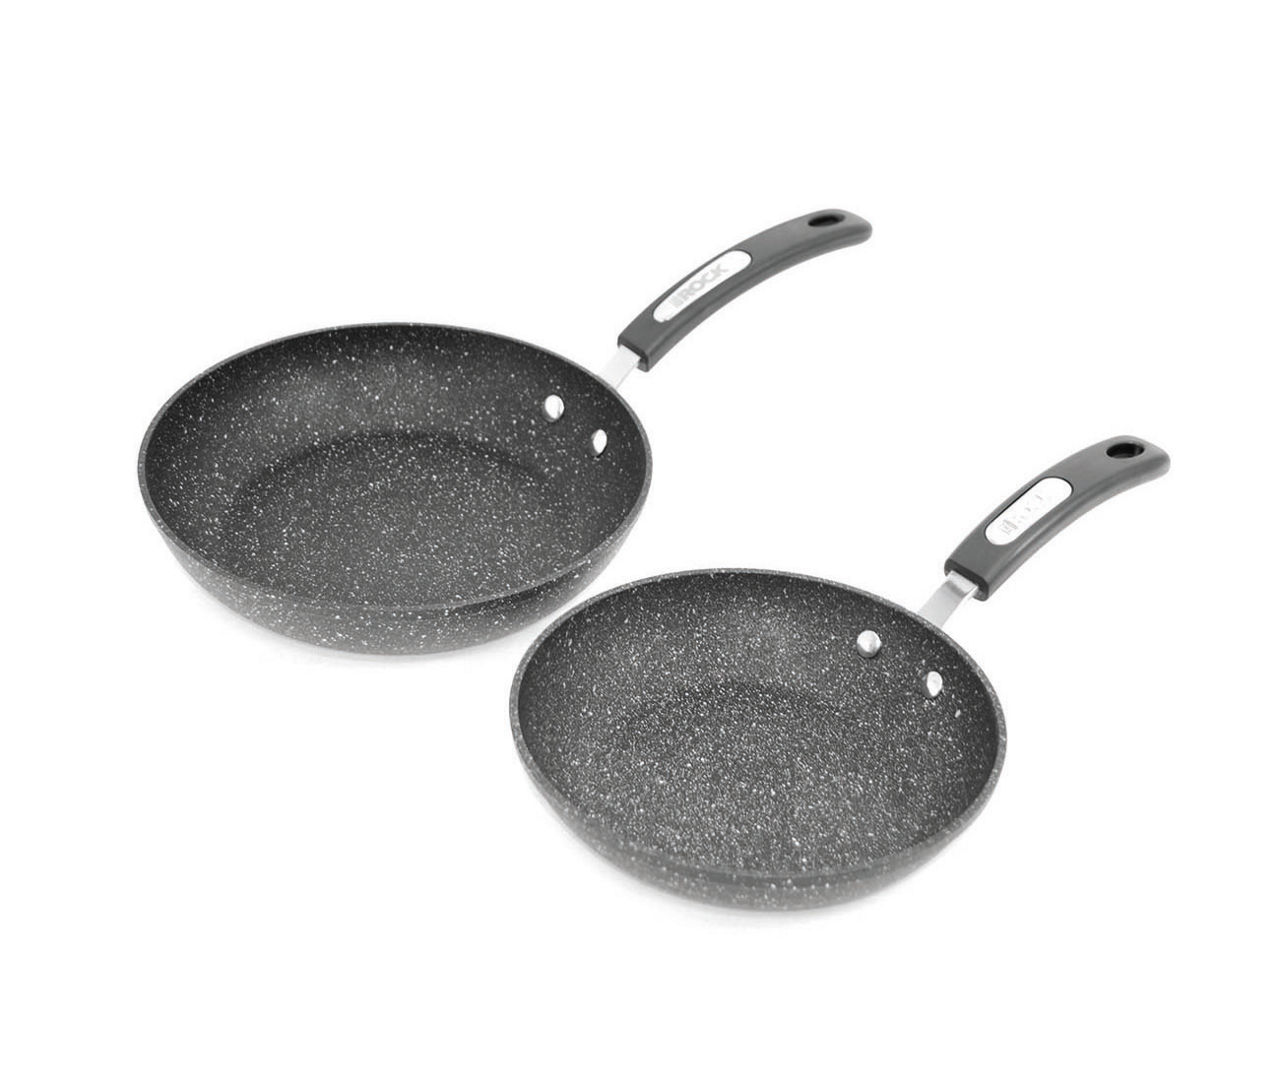 The RA41154 Set of 2 Fry Pans with Bakelite Handles Srft060740